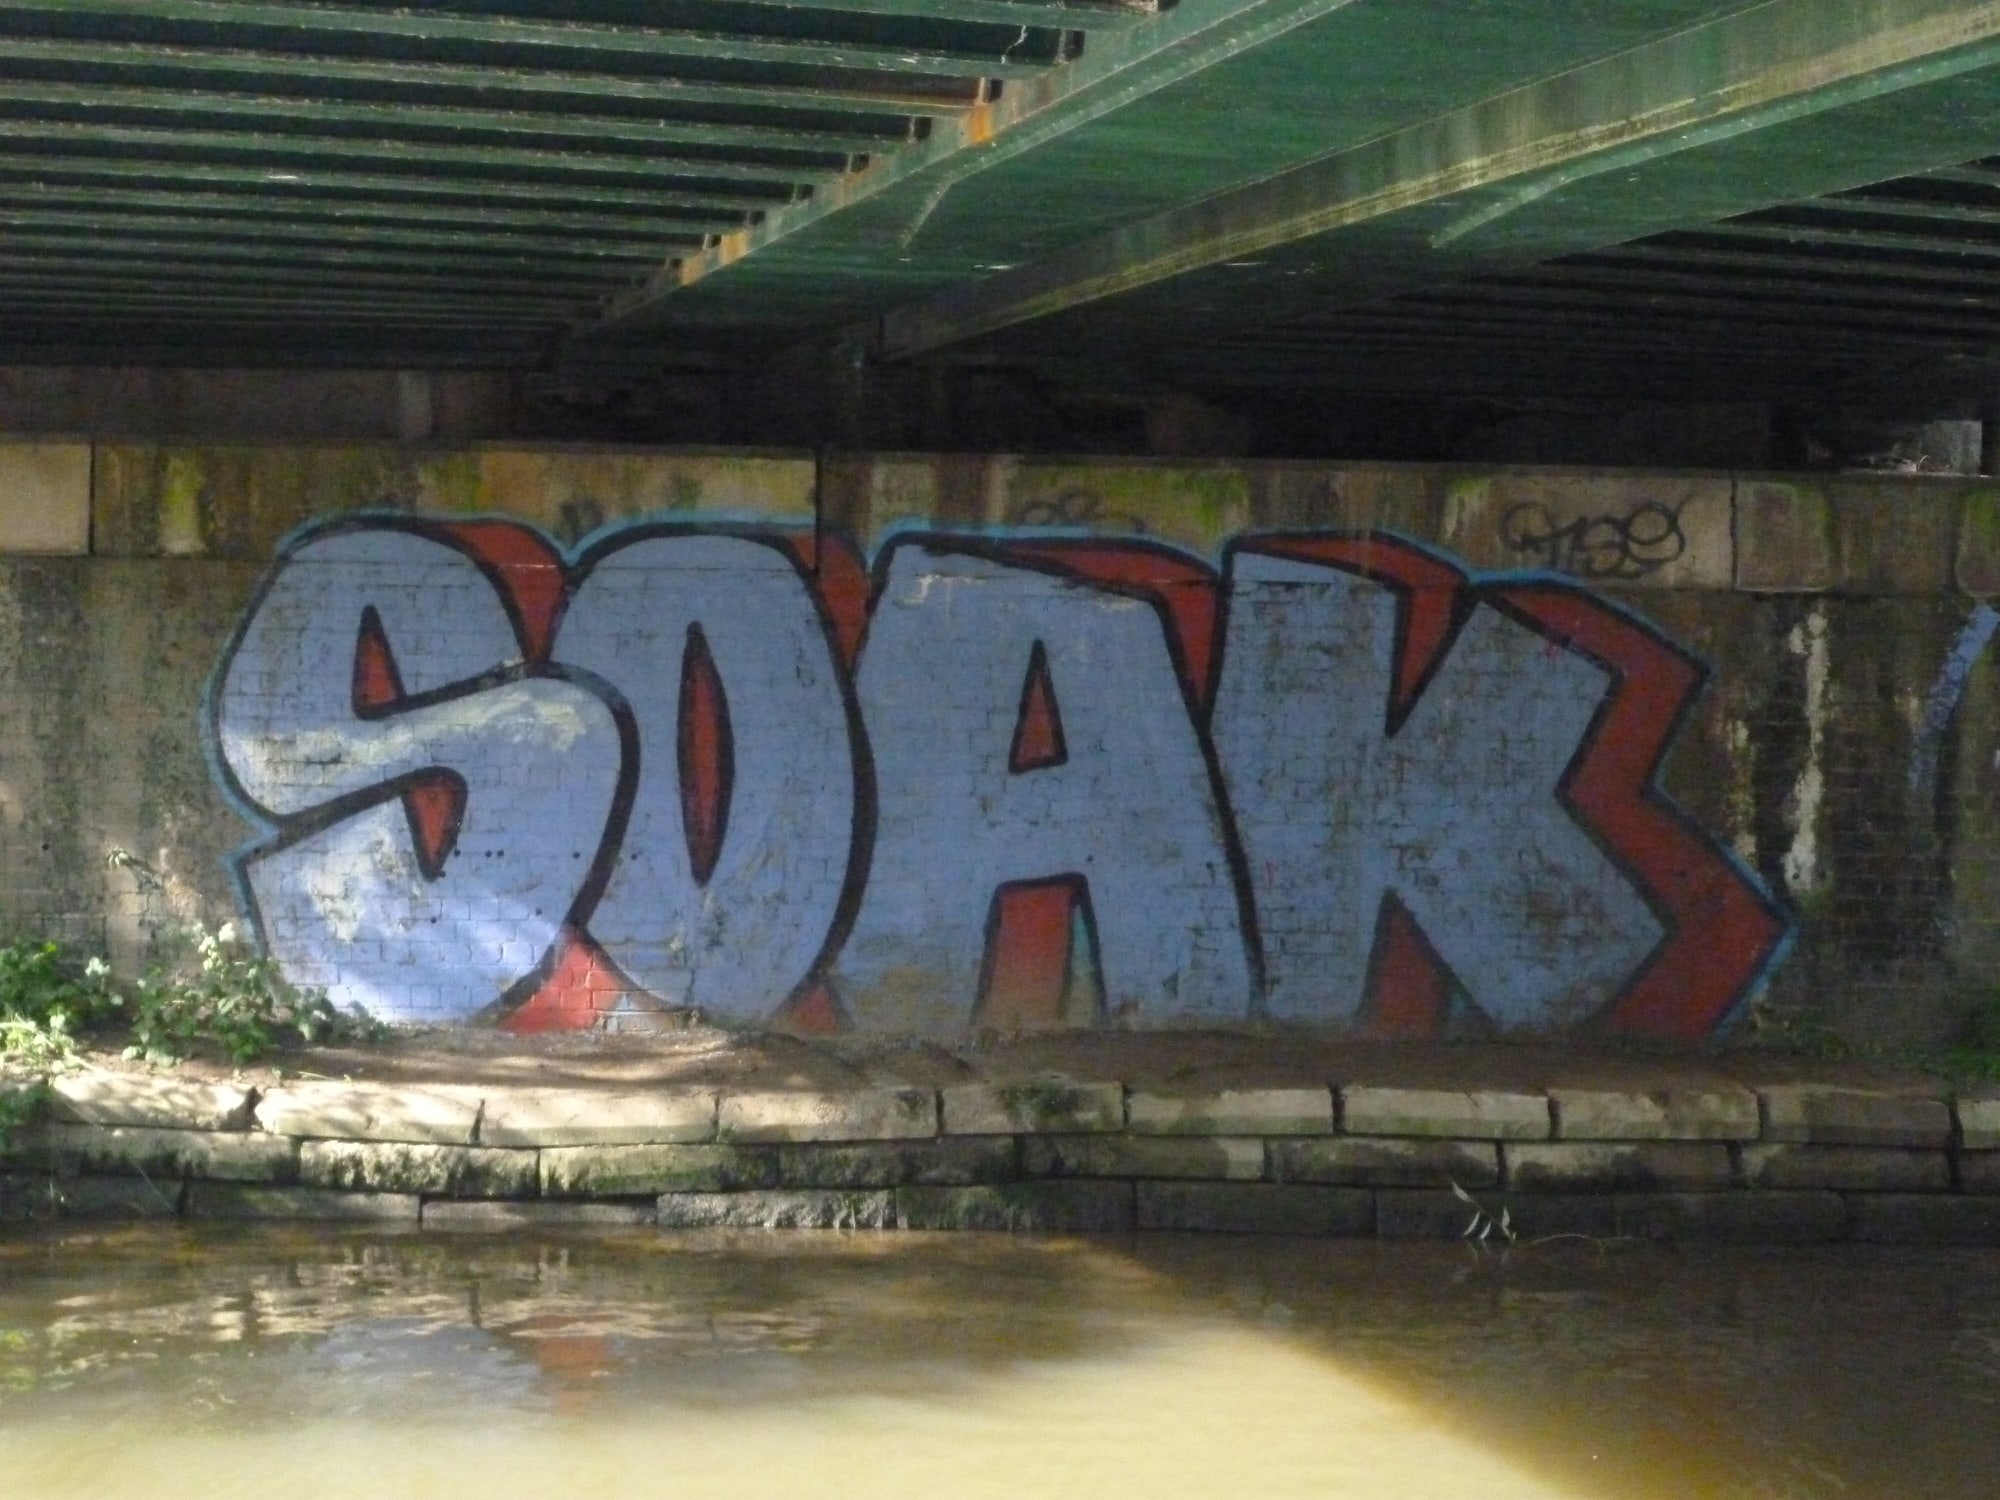 Graffiti on bridge. Overlapping letters